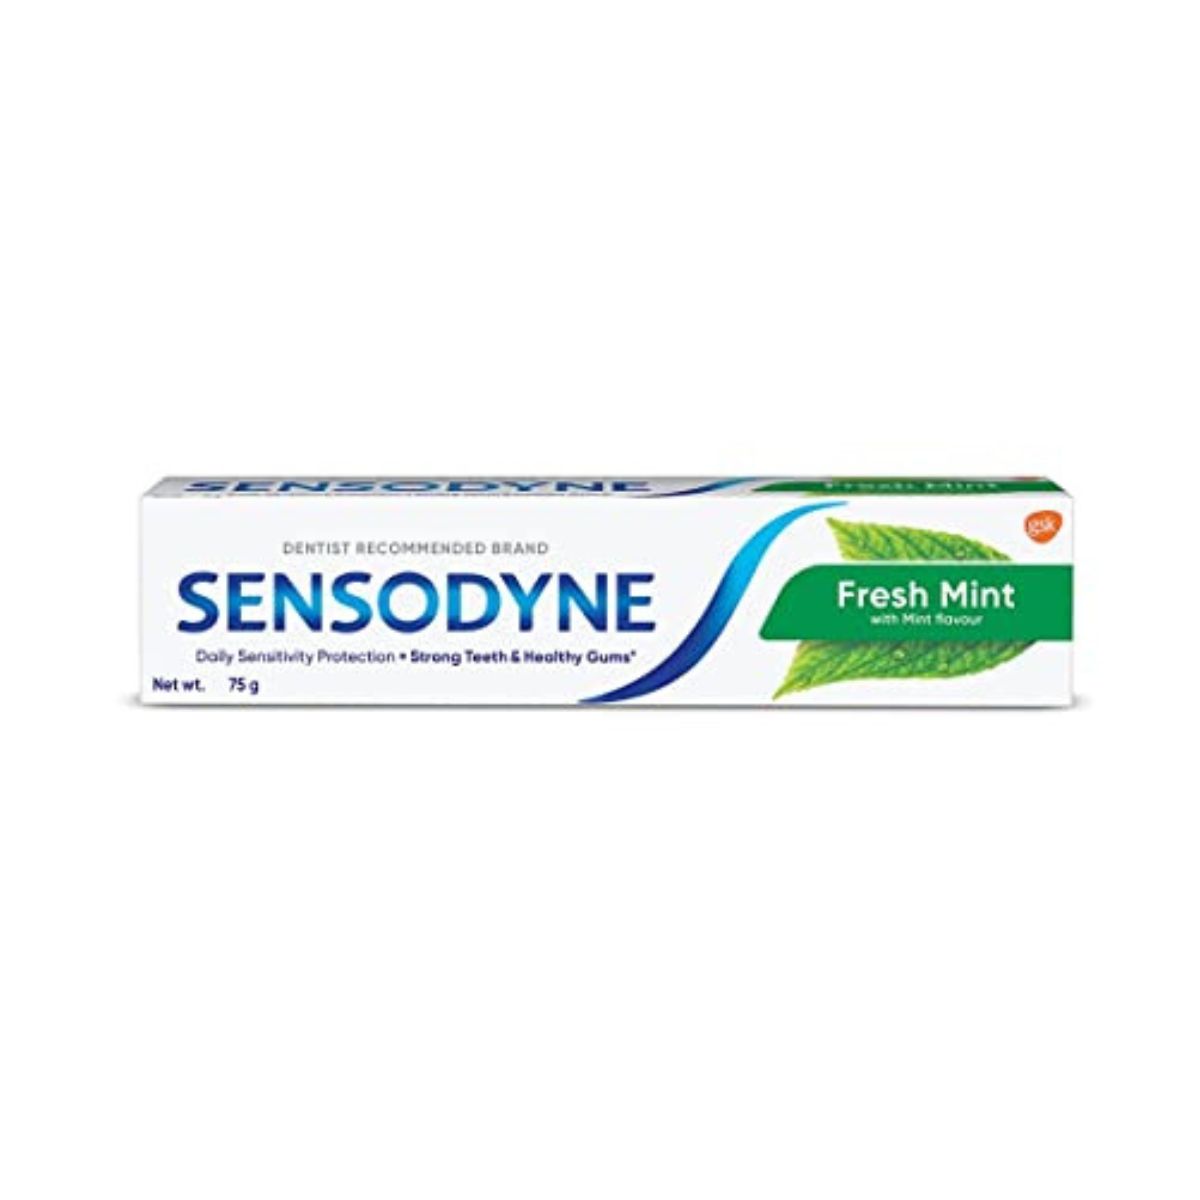 Sensodyne Fluoride Toothpaste - Fresh Mint